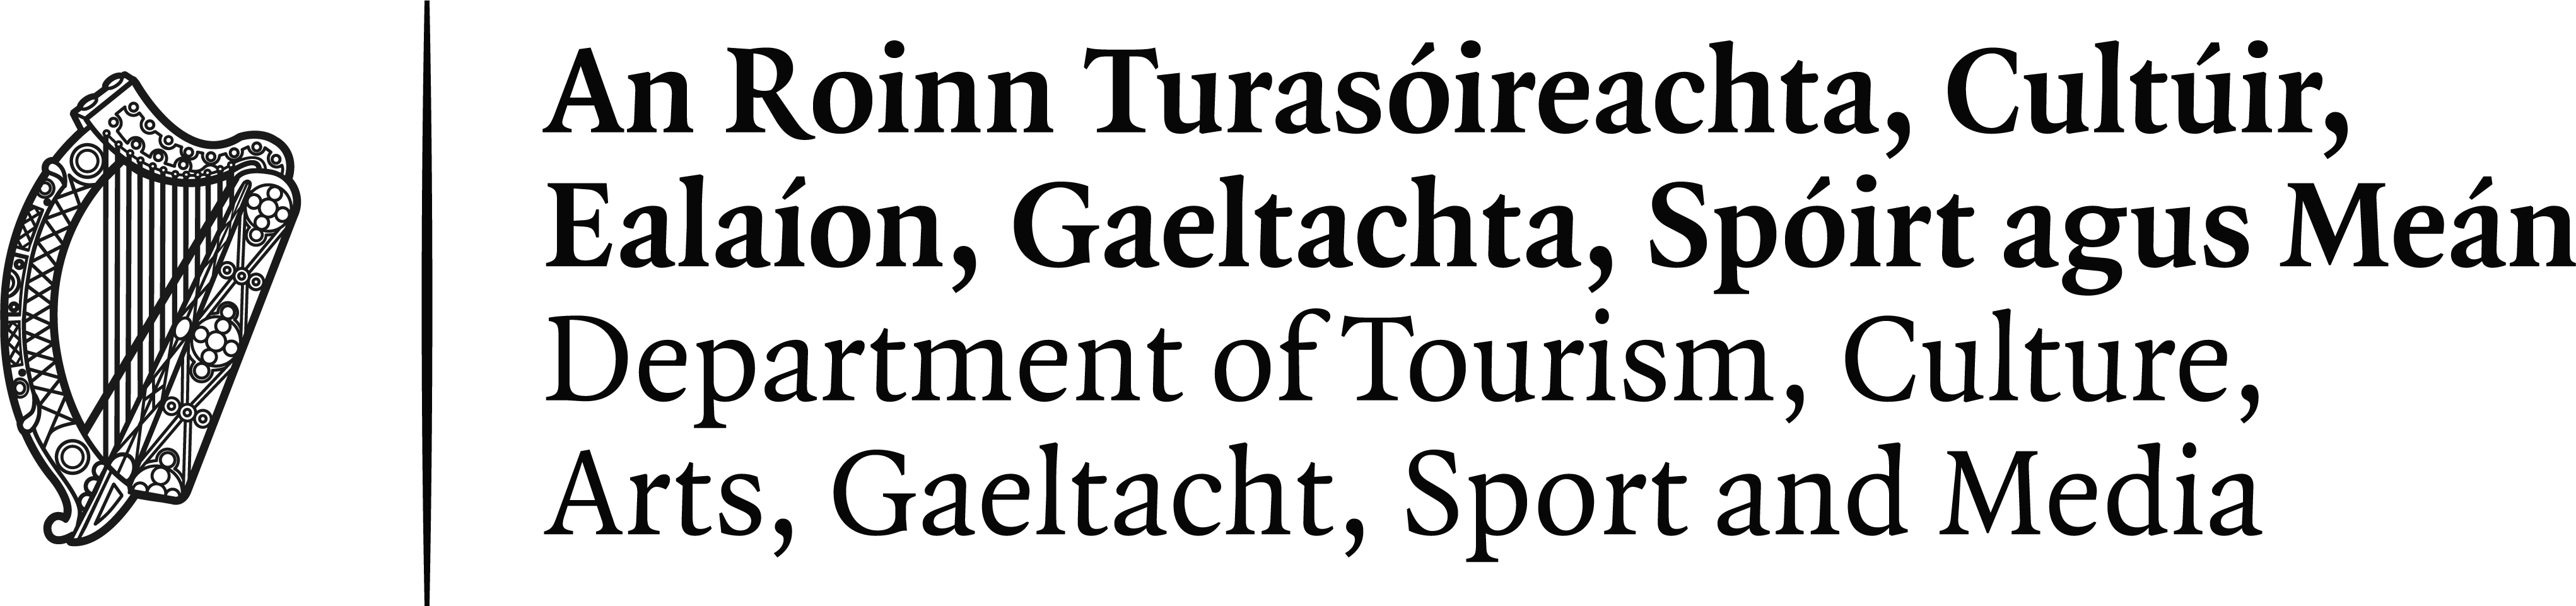 Dept. Tourism Culture Arts Gaeltacht Sport Media